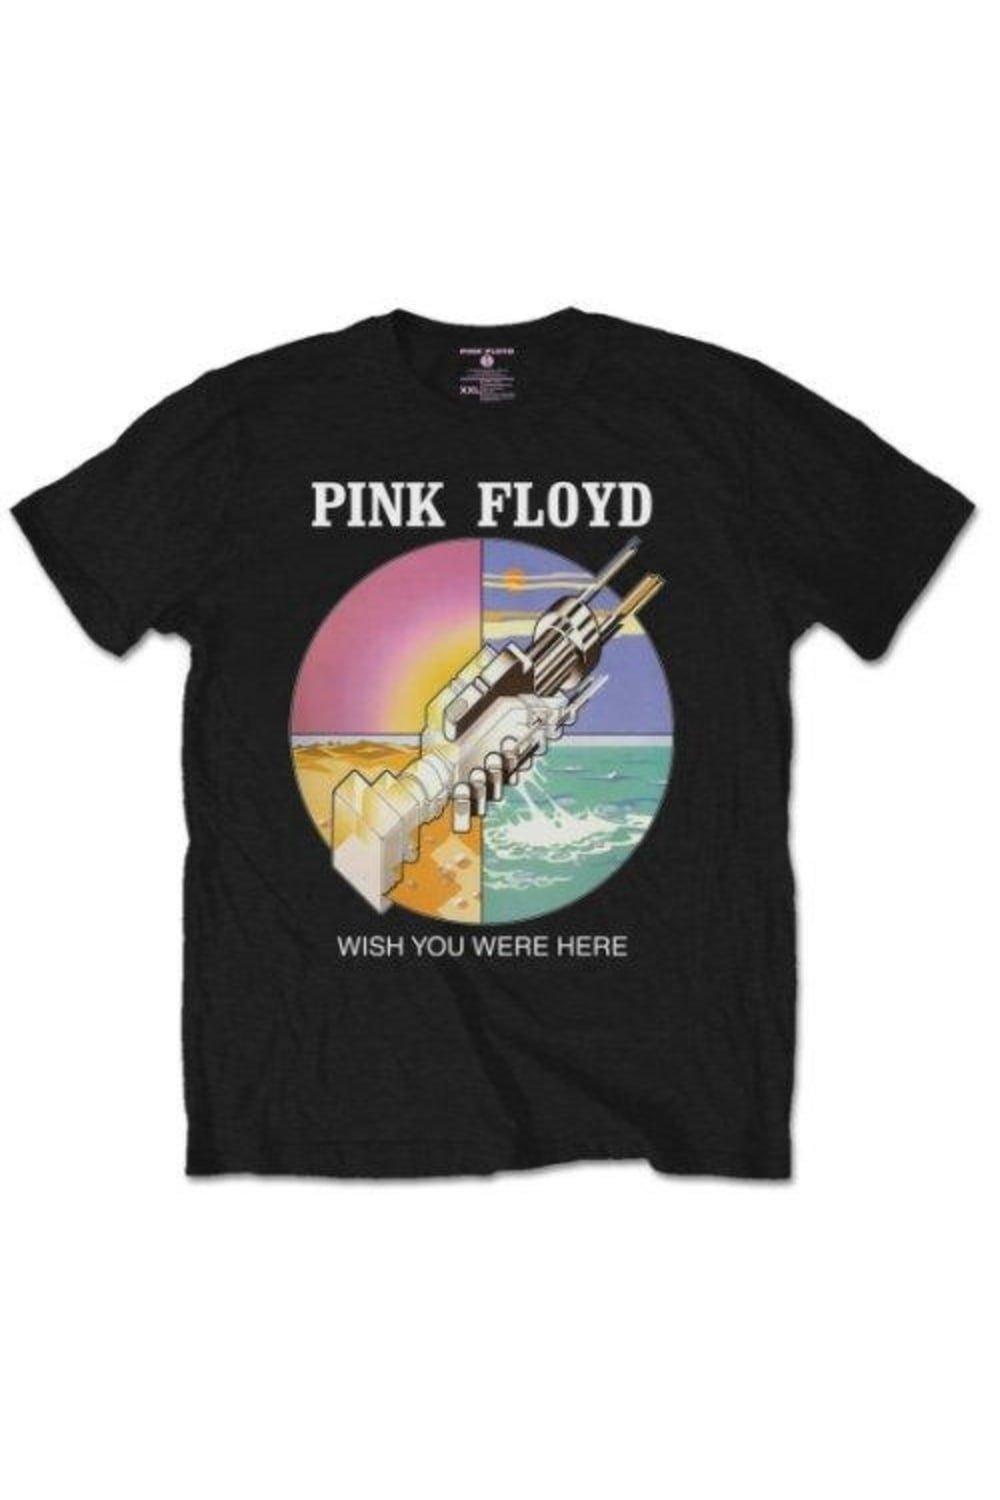 Круглая футболка Wish You Were Here Pink Floyd, черный cd диск wish you were here pink floyd